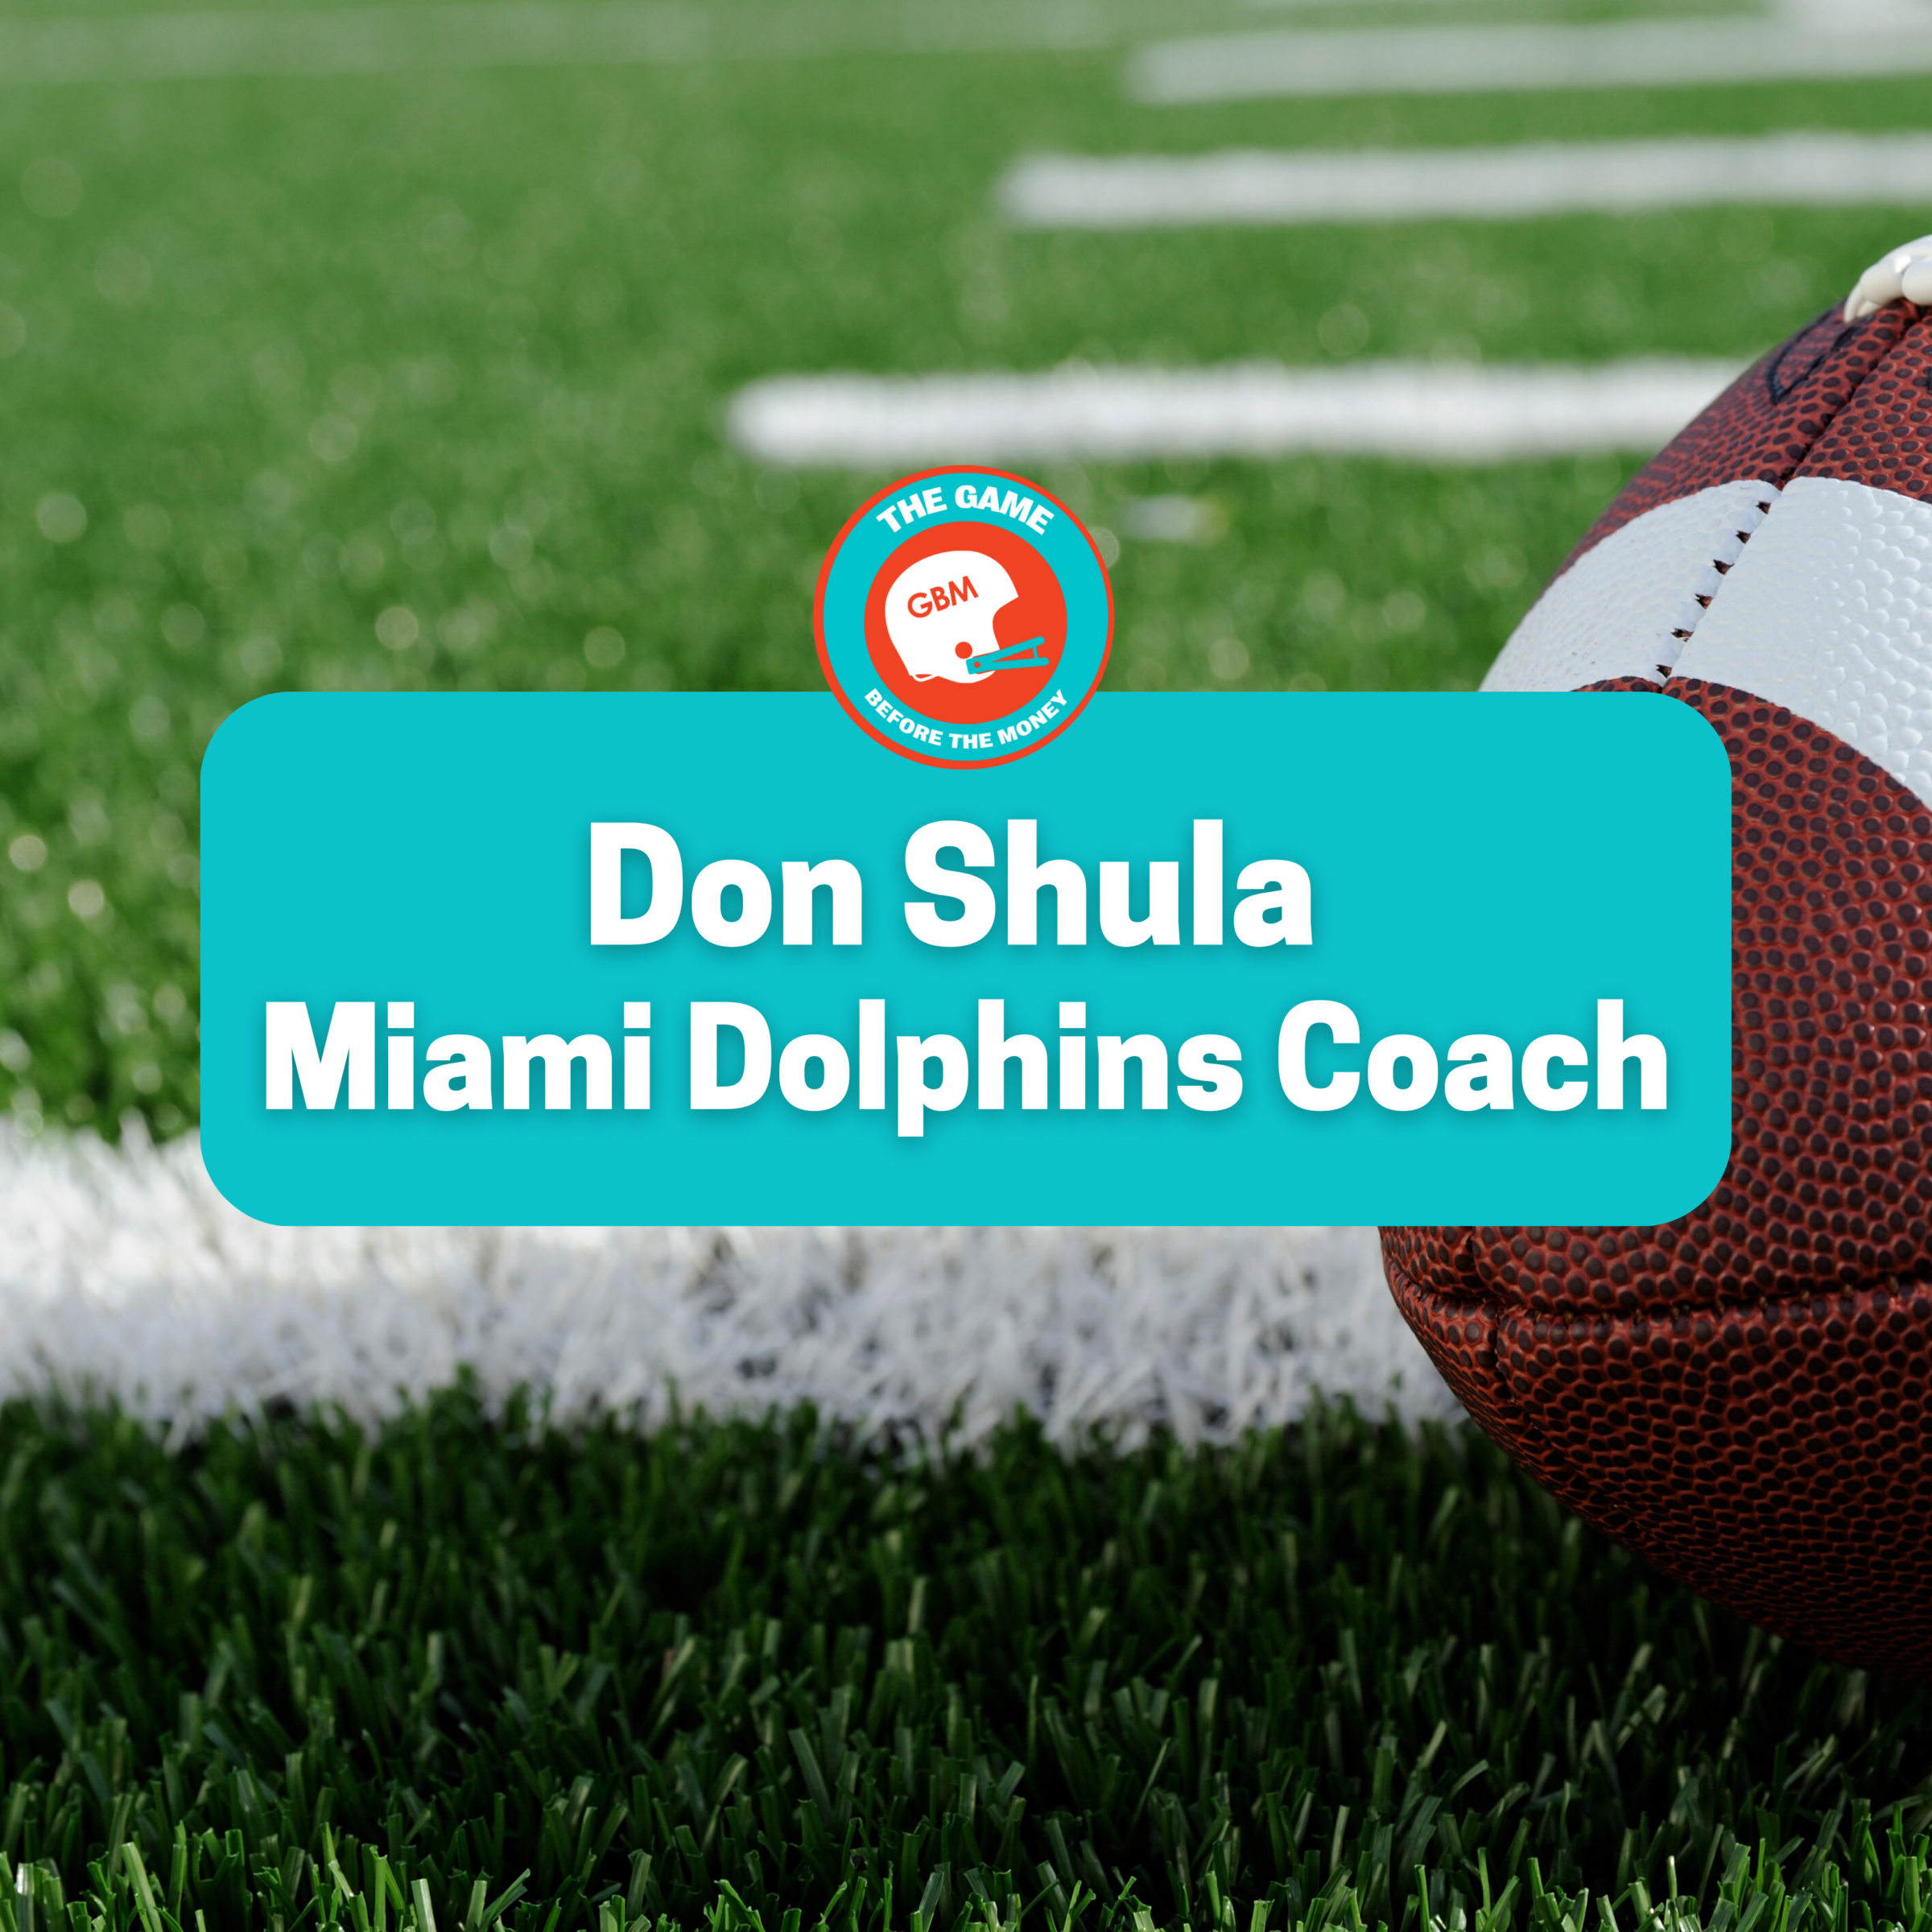 Don Shula as Miami Dolphins Coach